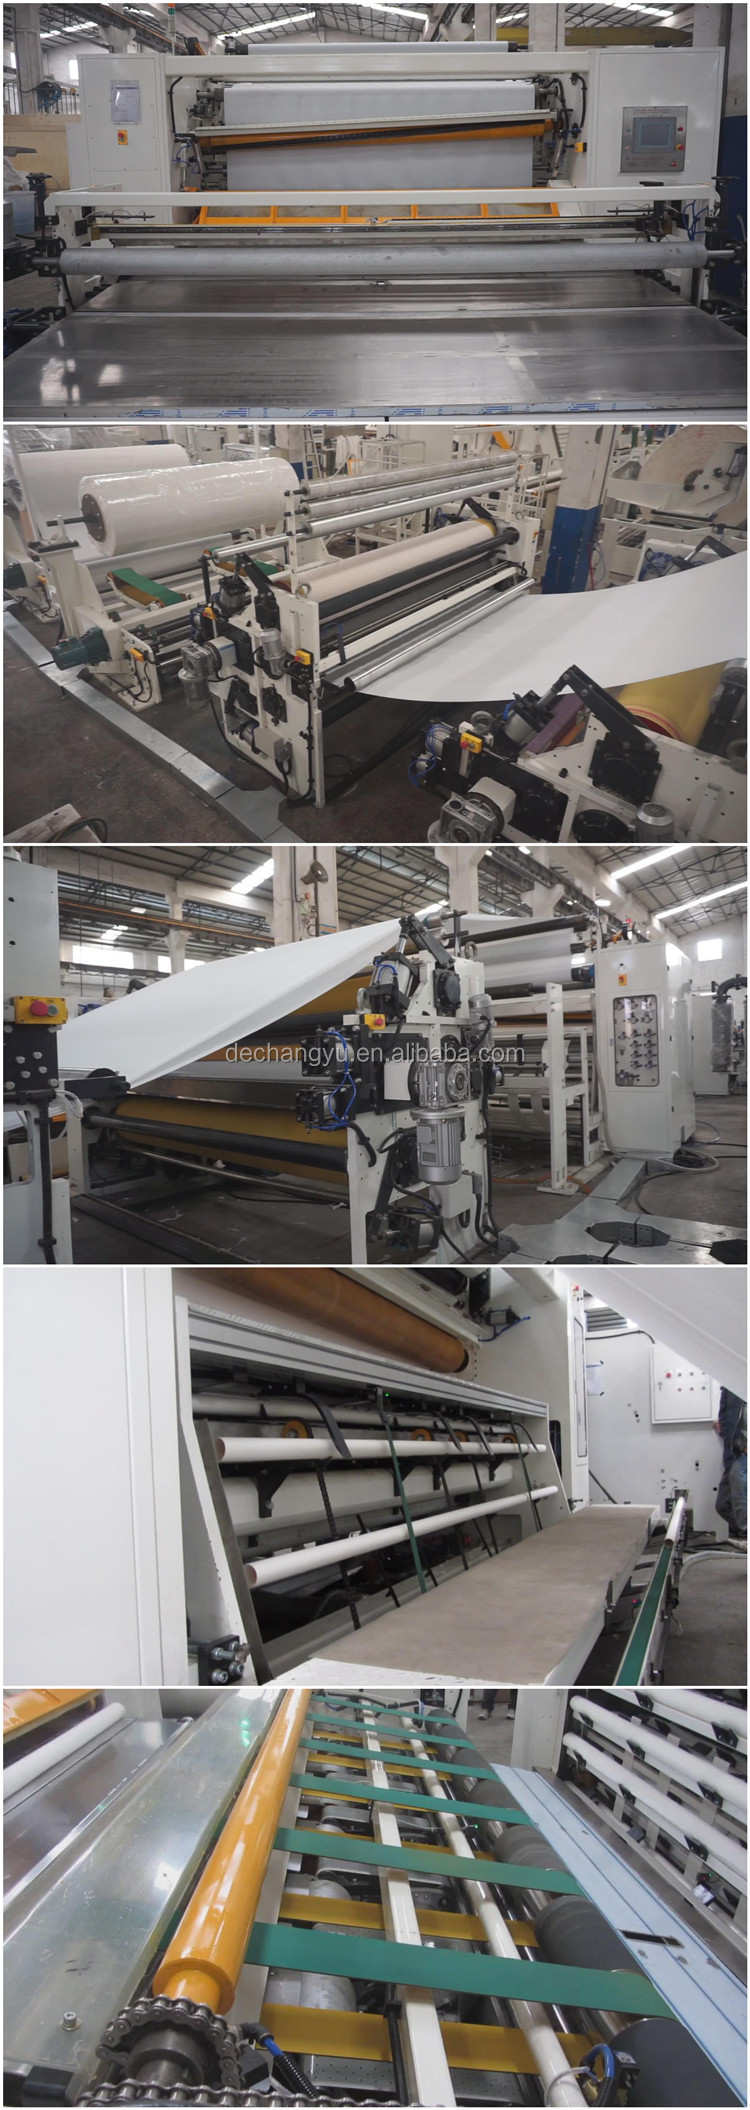 Zq-iii-h400全自動マシンの良い品質のトイレットペーパーは、 マシンを作成仕入れ・メーカー・工場